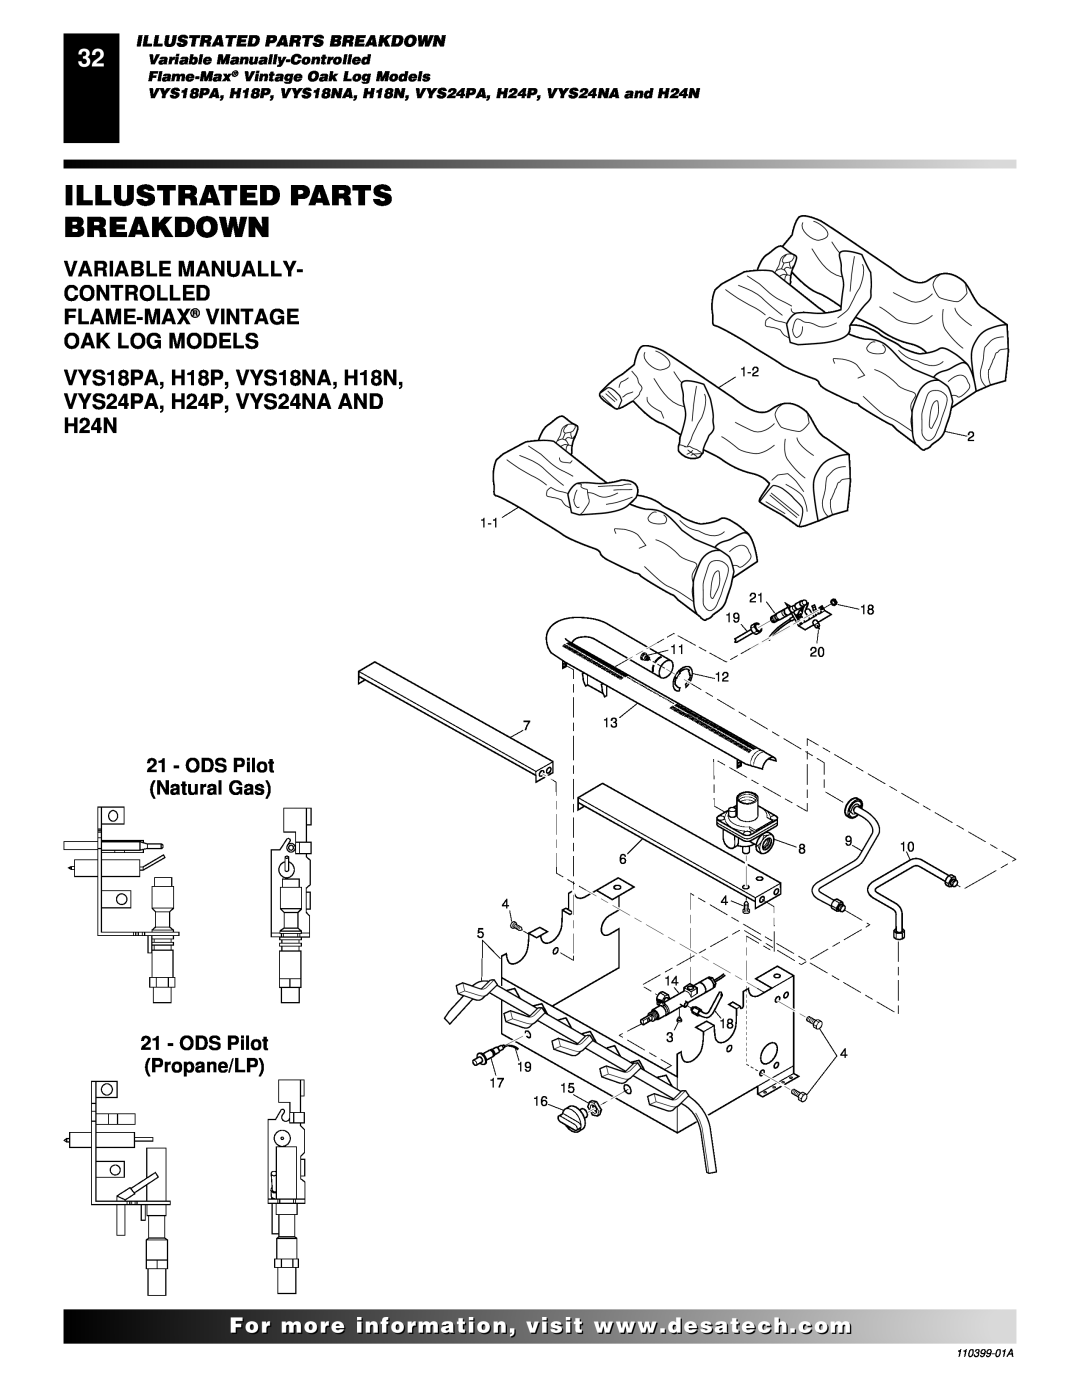 Desa FLAME-MAX Golden Illustrated Parts Breakdown, Variable Manually Controlled Flame-Max Vintage, Oak Log Models 